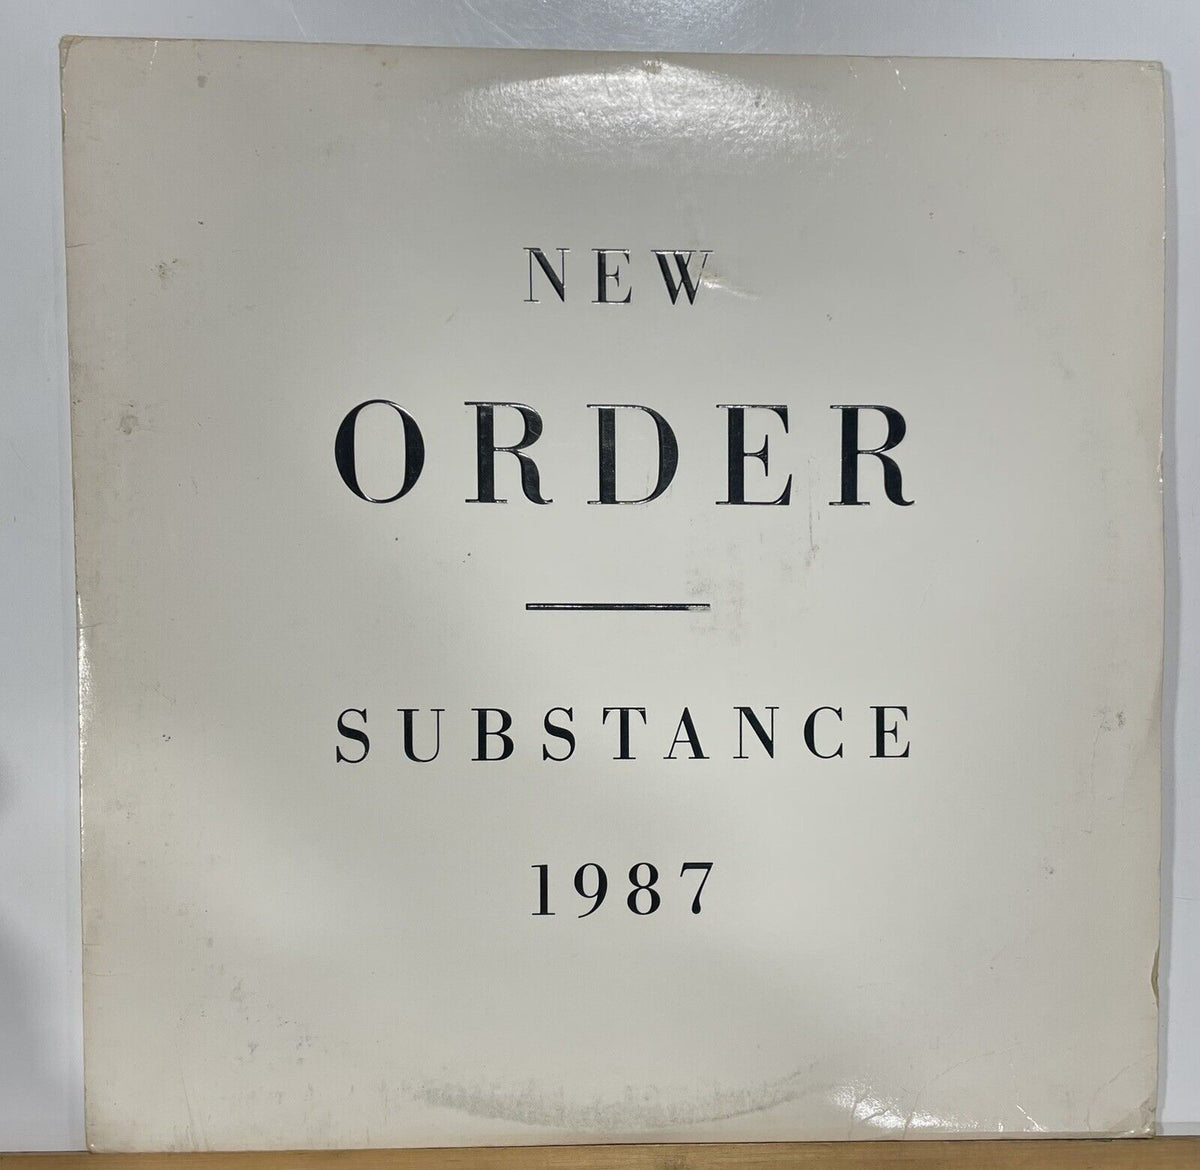 NEW ORDER - SUBSTANCE 1987 (VINYL RECORD, ALBUM, 2 DISCS, LP